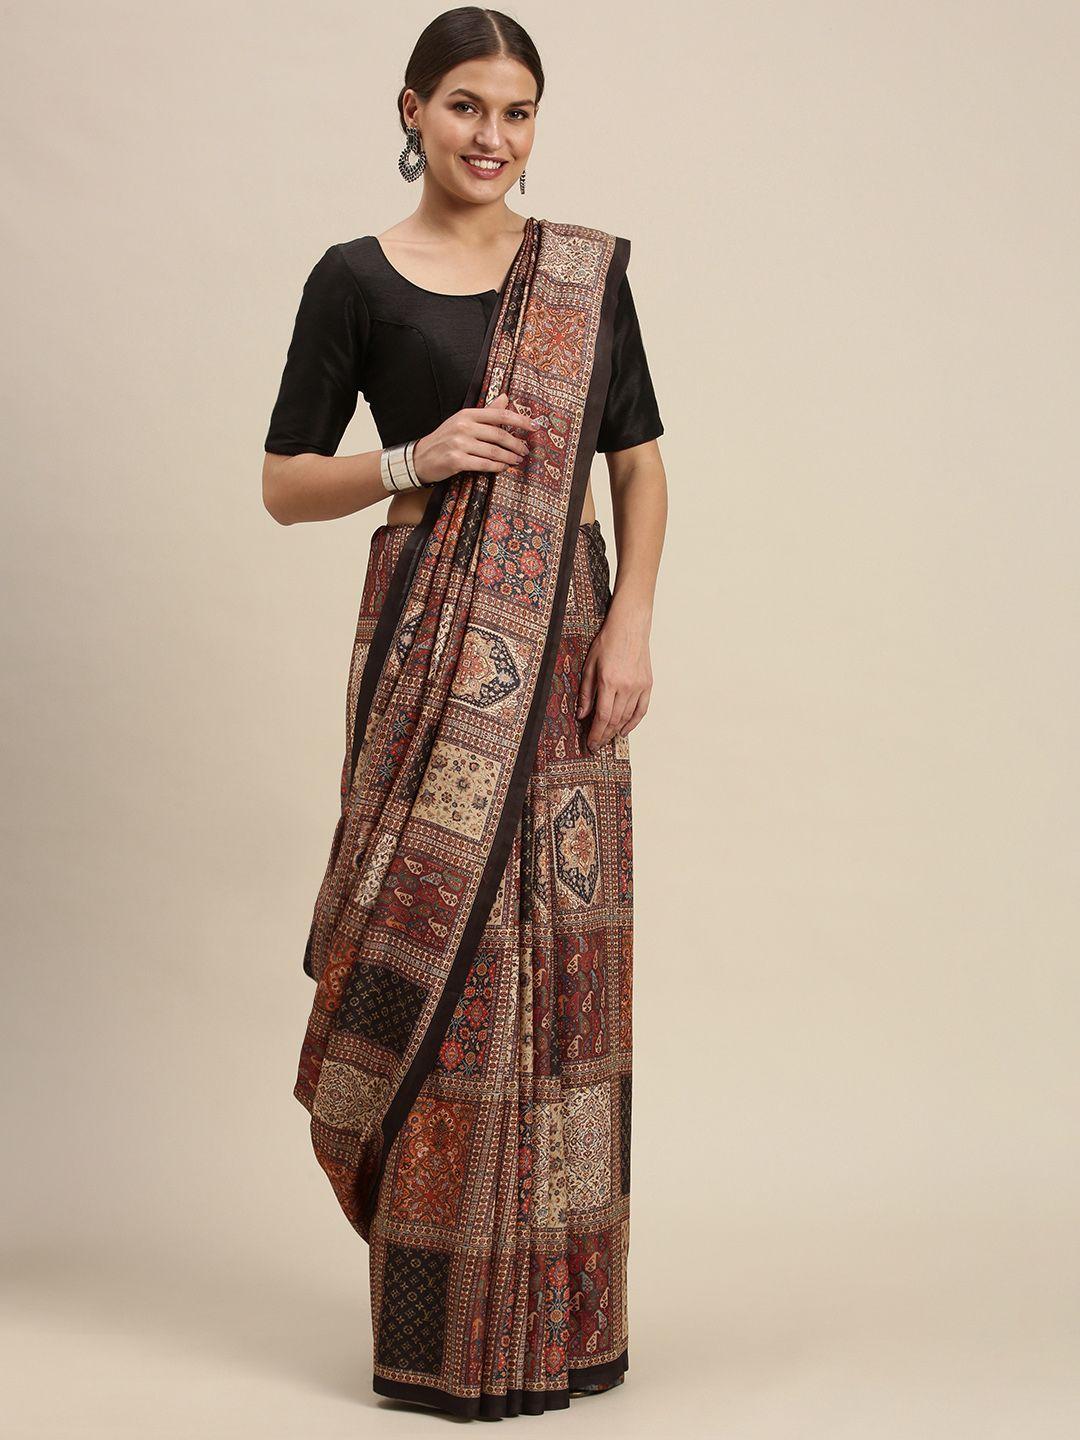 sangam prints brown & black ethnic motifs silk blend saree